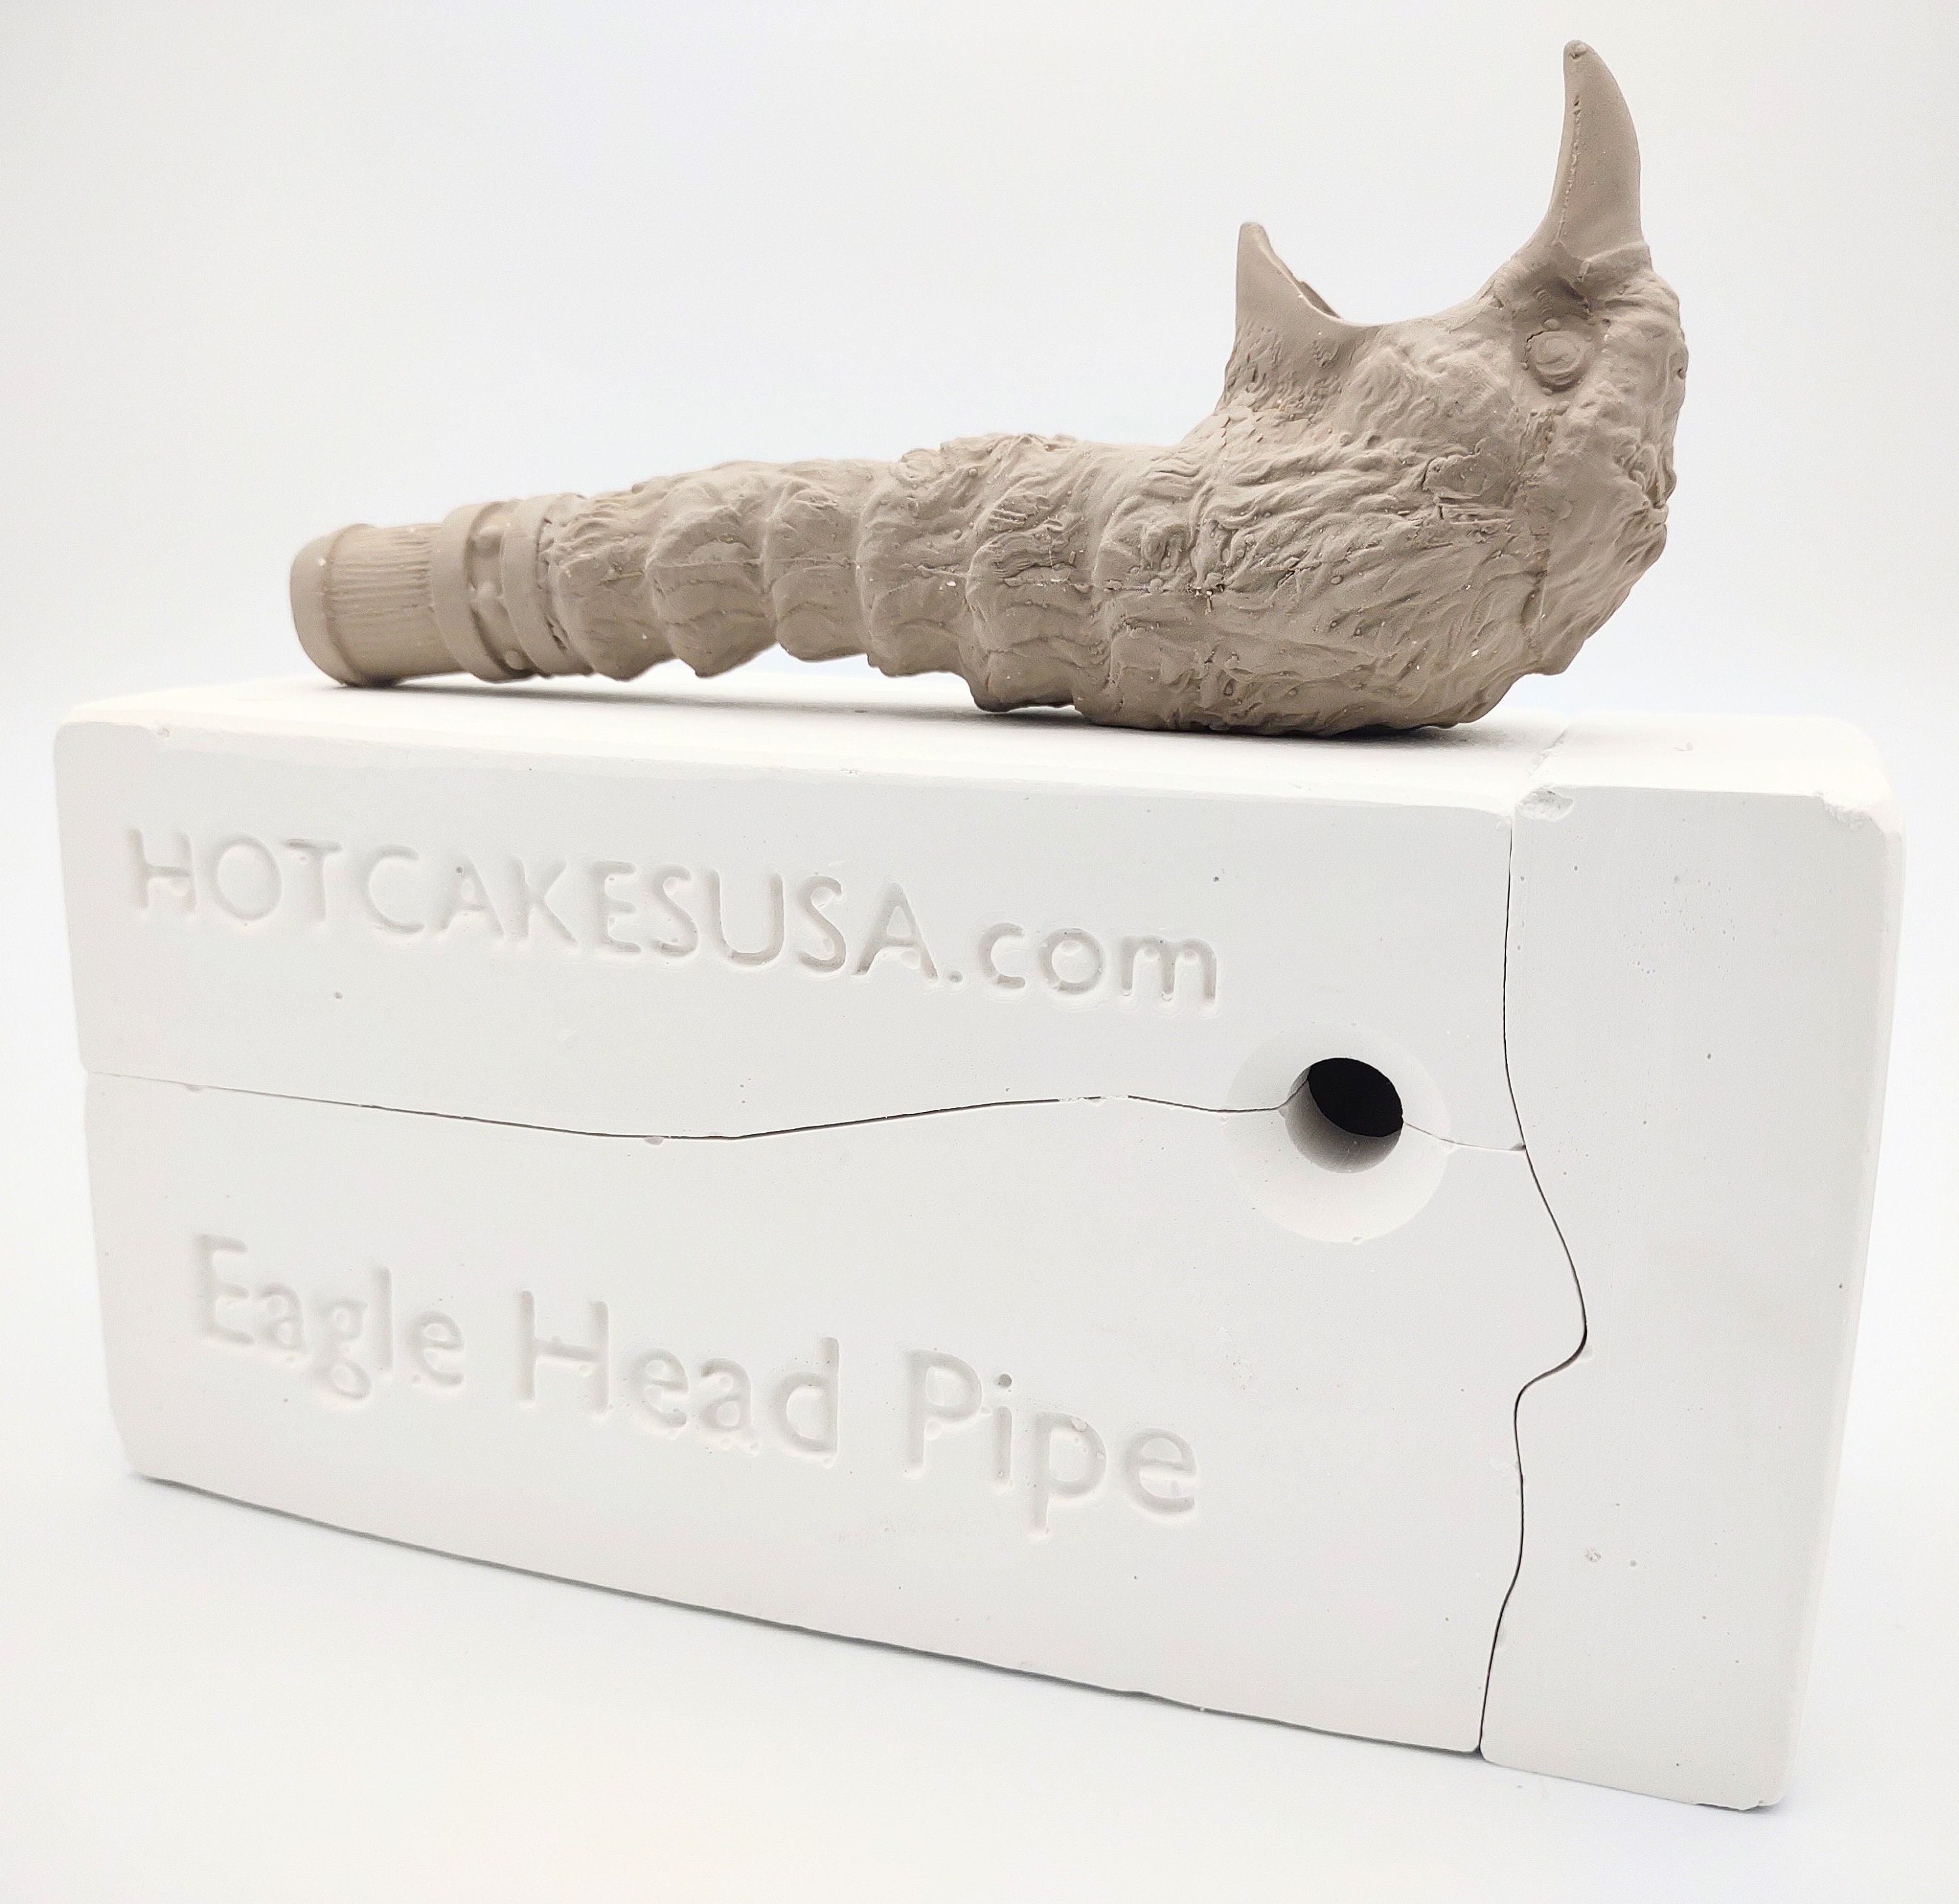 x3 Mushroom Sprig Mold Press Mould Ceramic Clay - HotCakesUSA